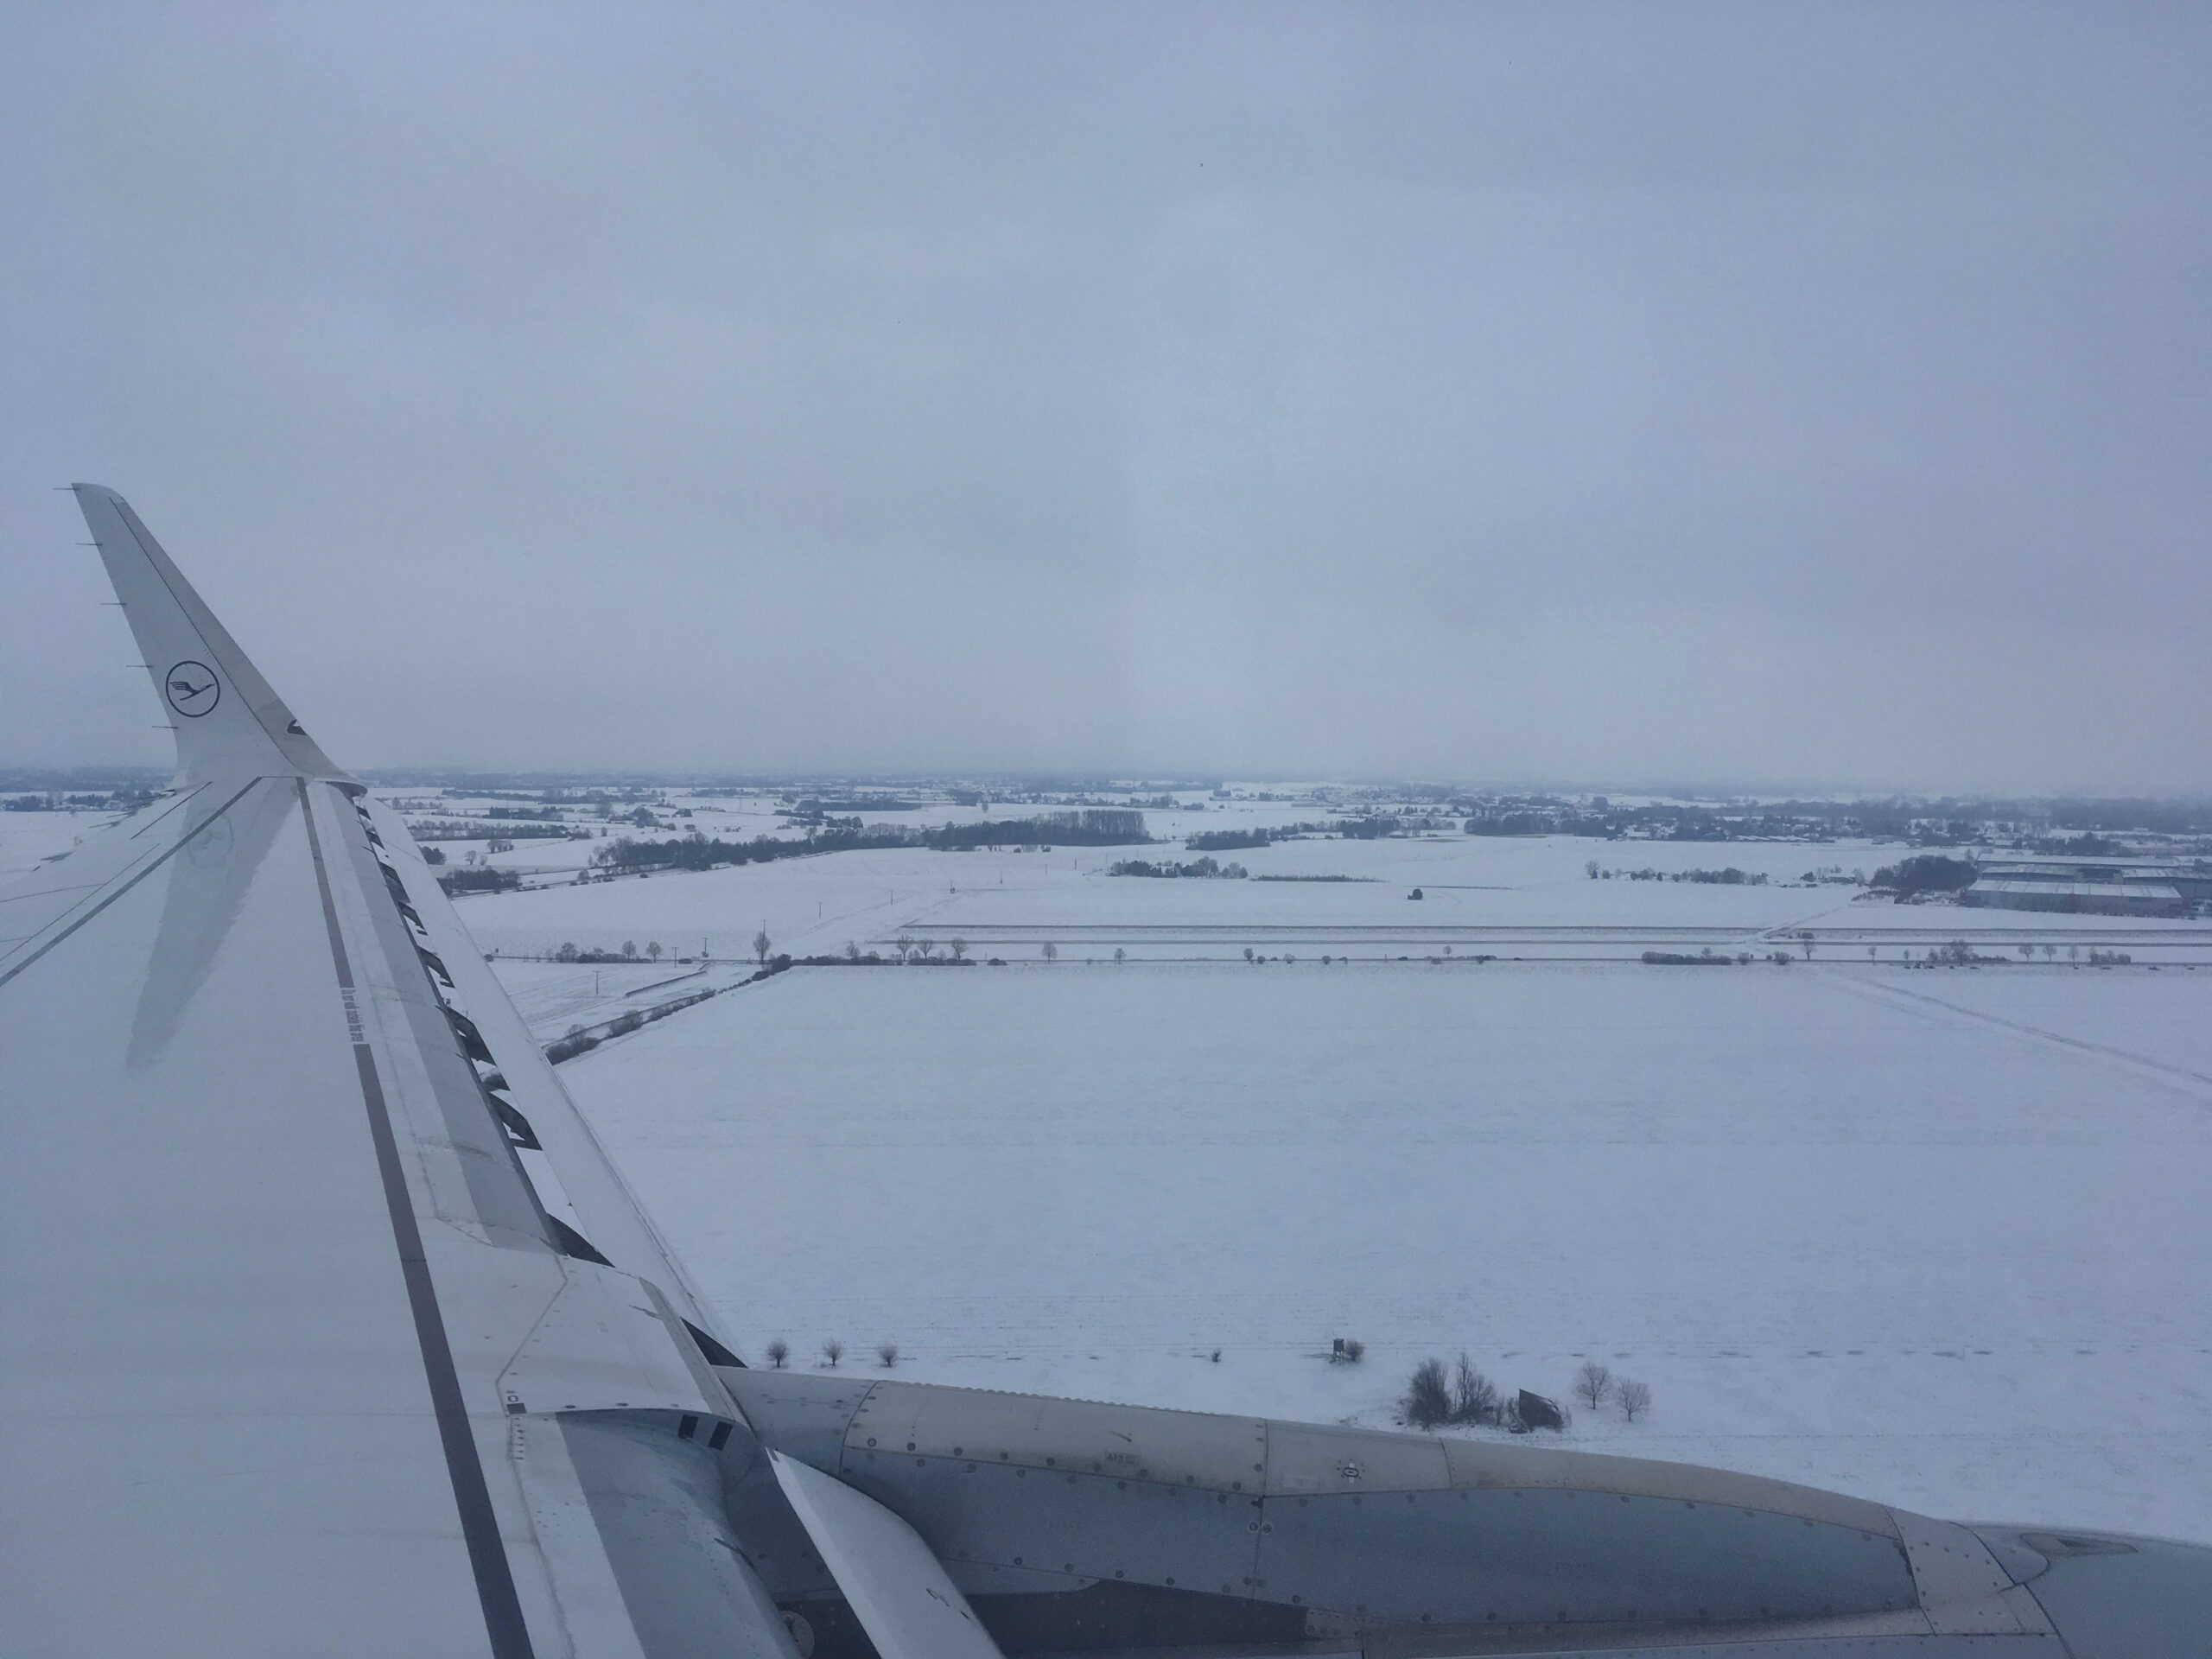 Lufthansa Plane Wing in Snow